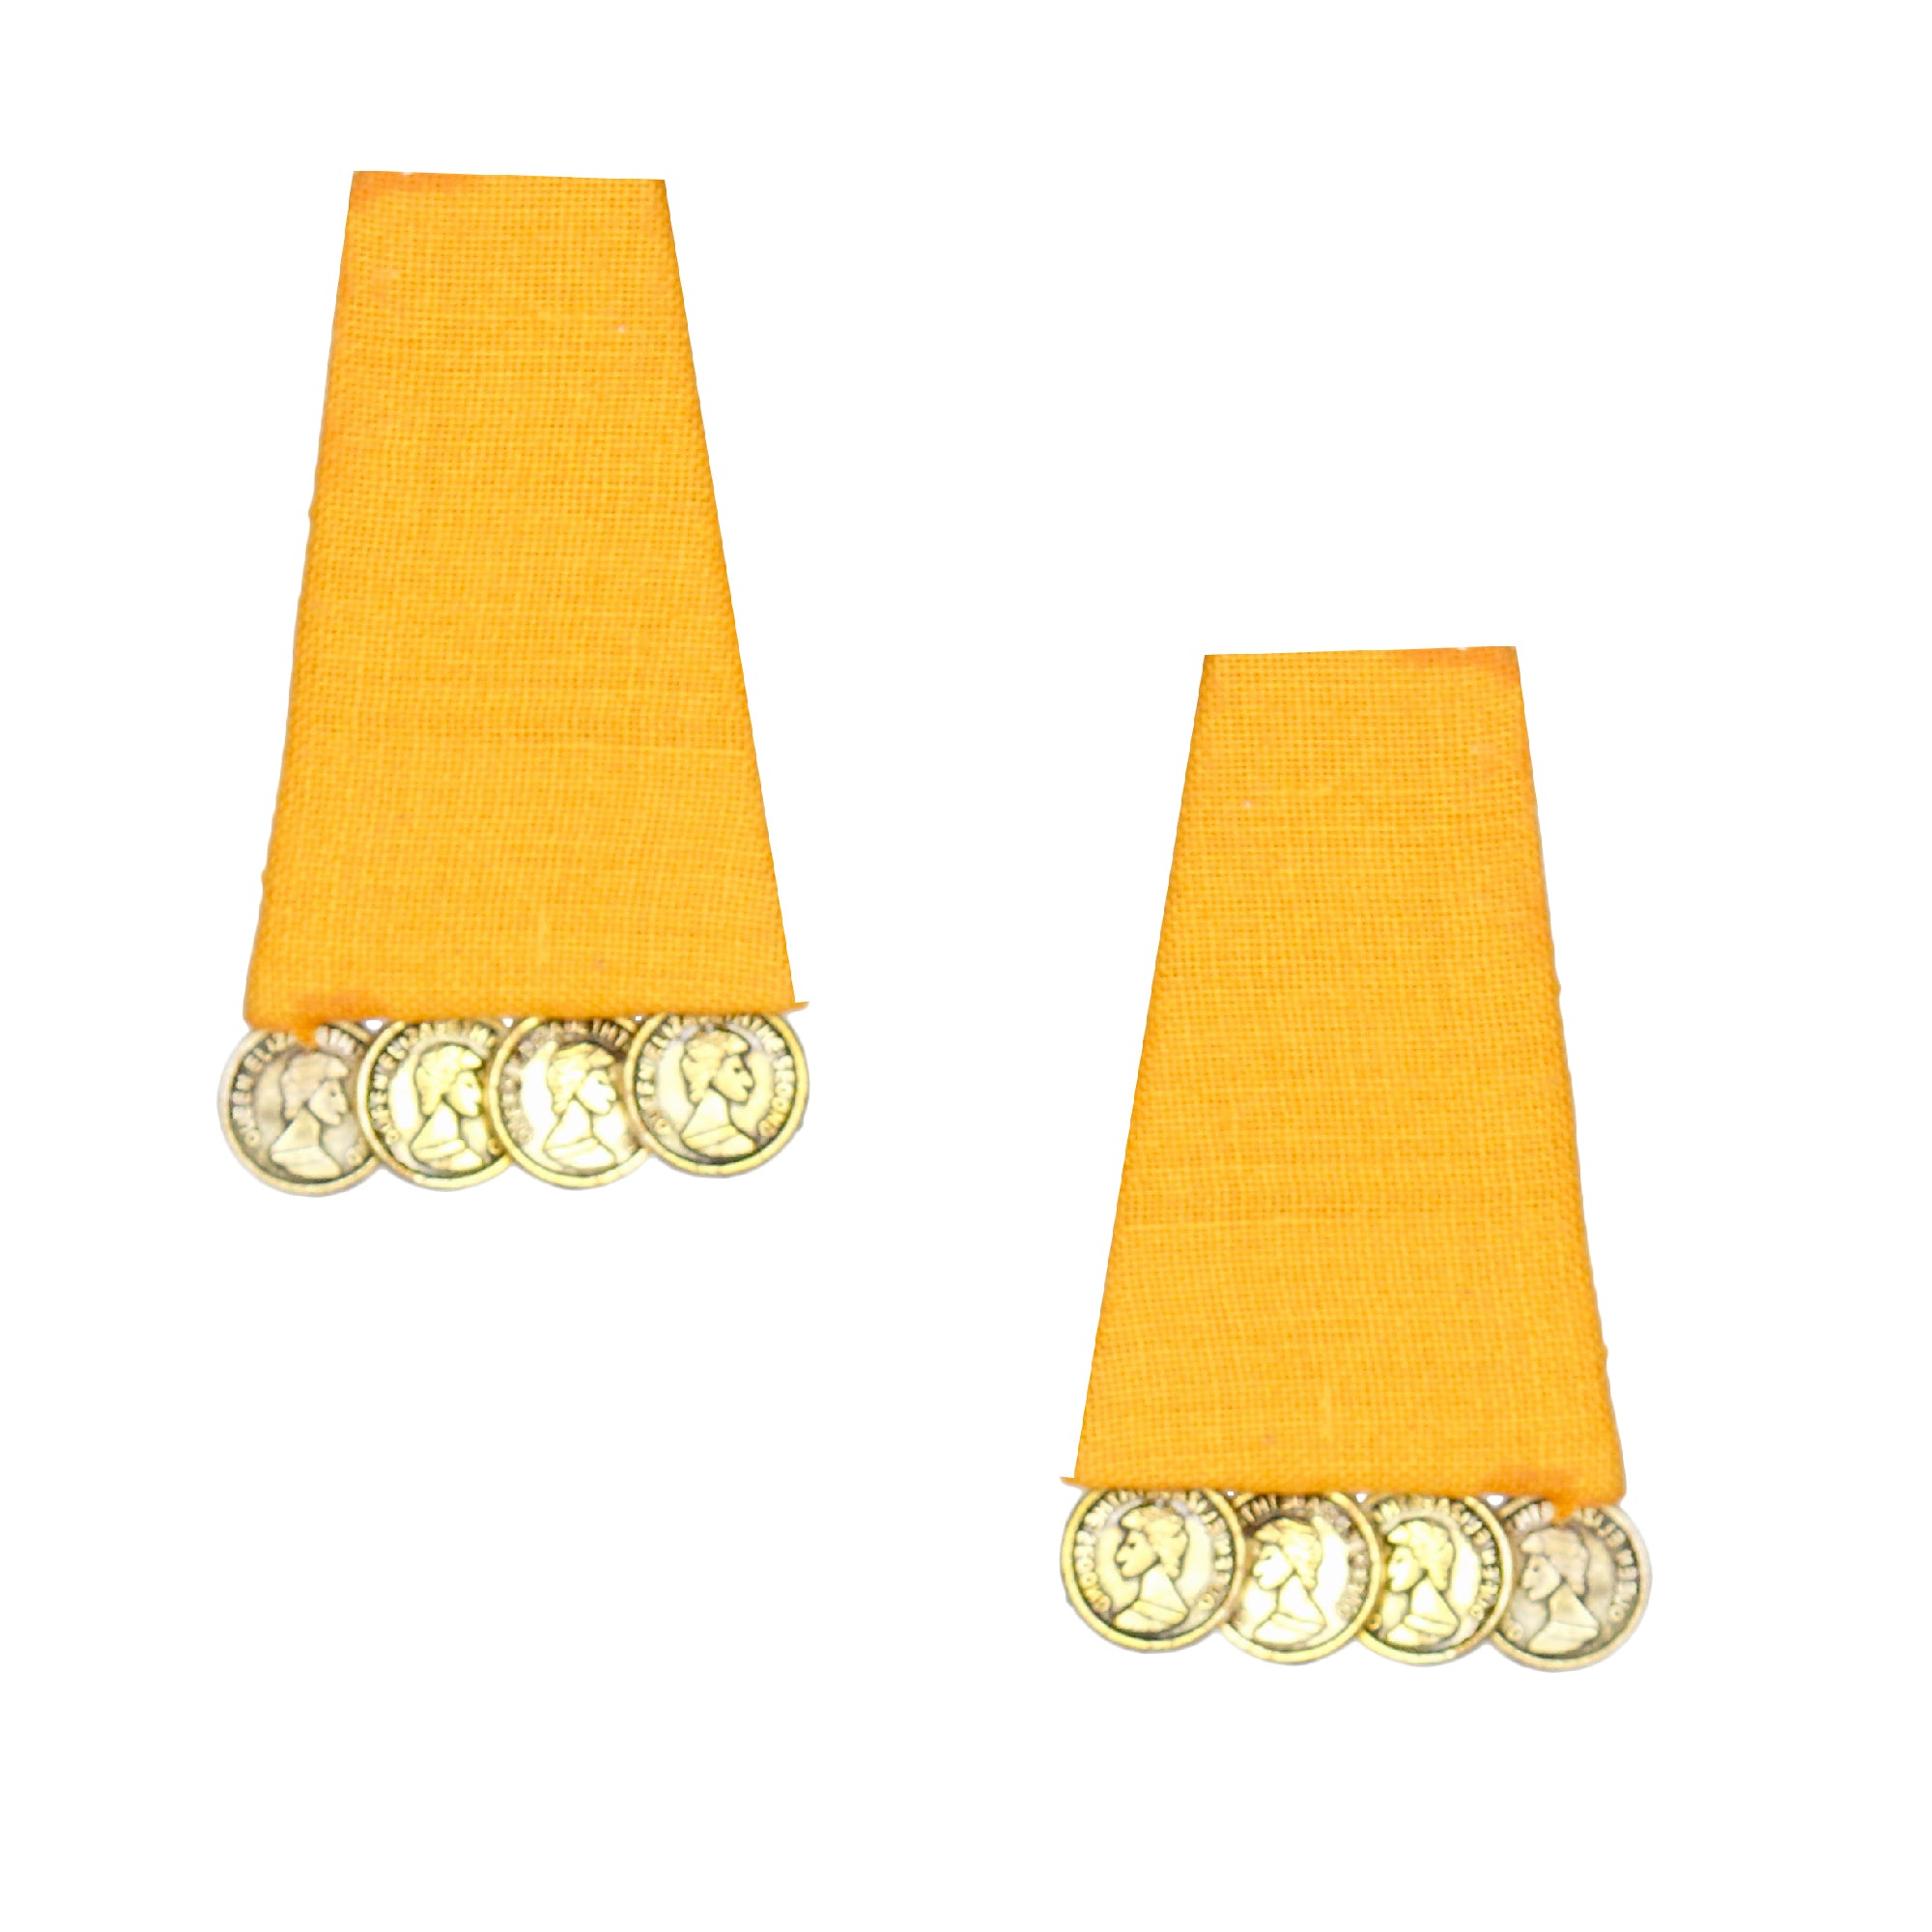 Hastkalakari Handmade Elegant Geometrical Yellow Fabric Stud Earrings With Antique Golden Coins For Women